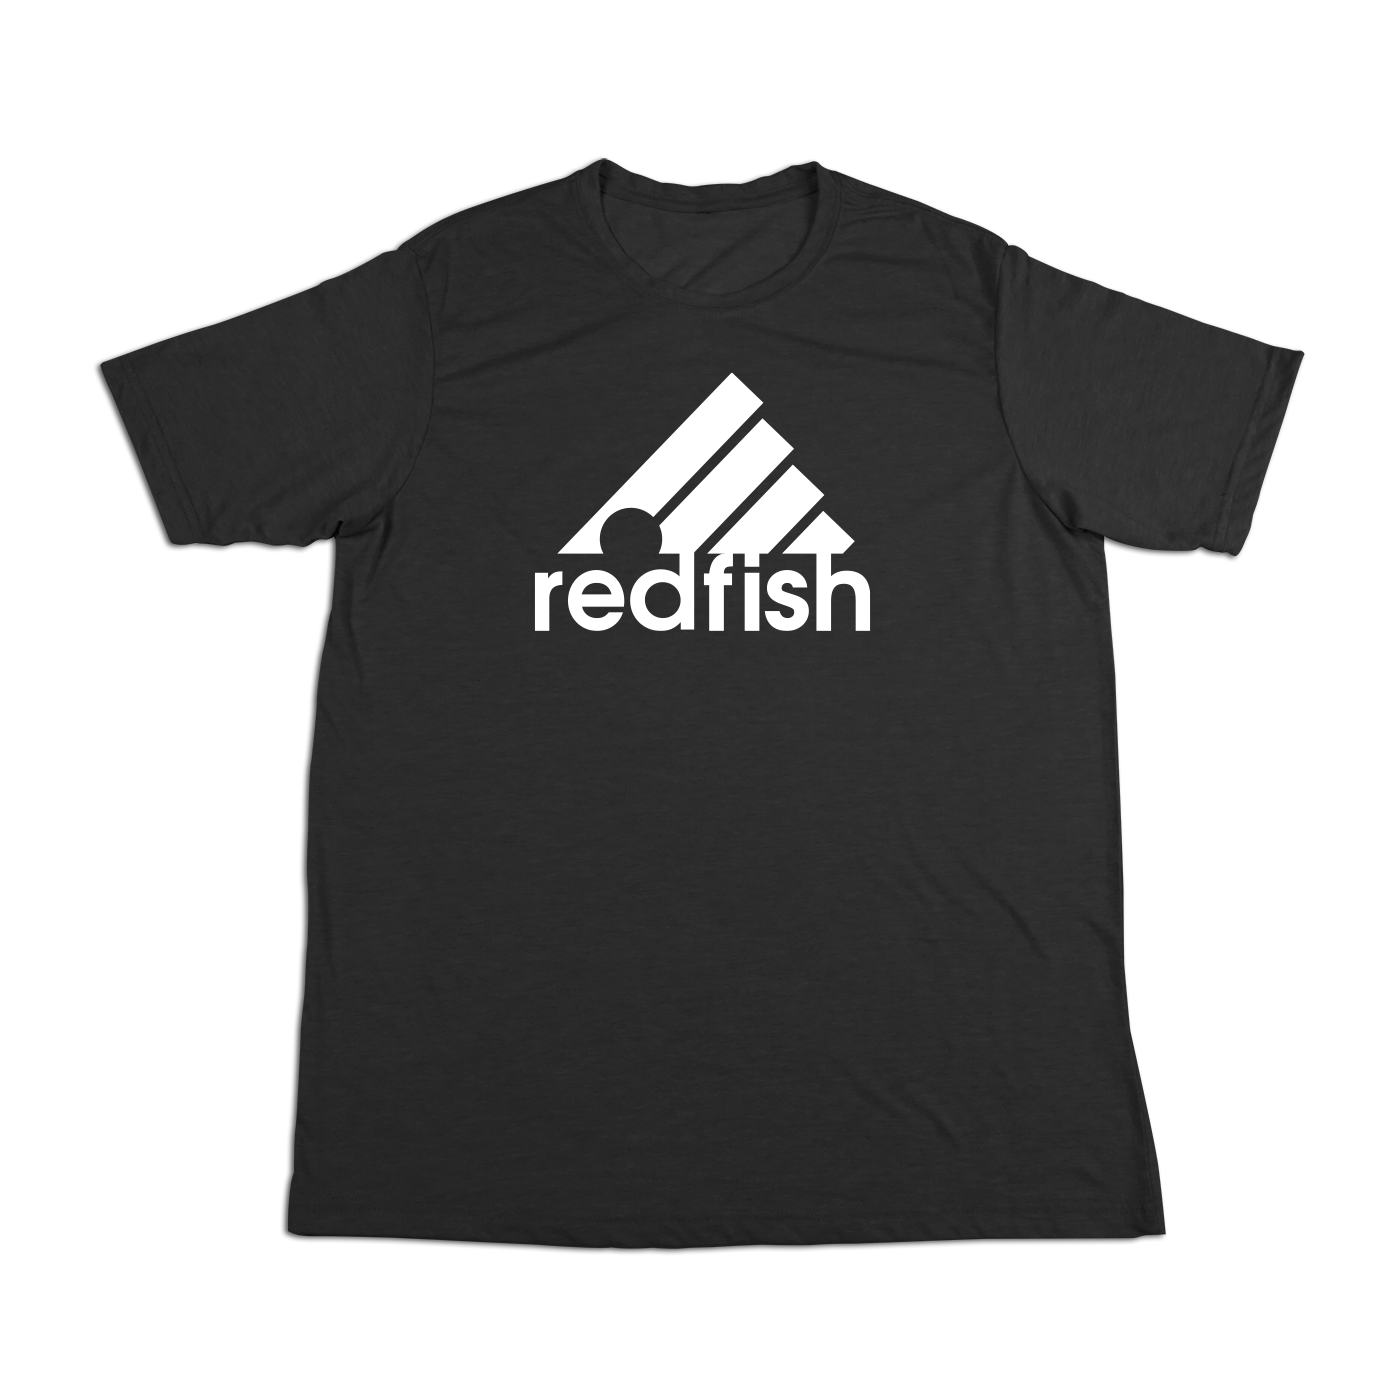 #REDFISH Soft Short Sleeve Shirt - Hat Mount for GoPro